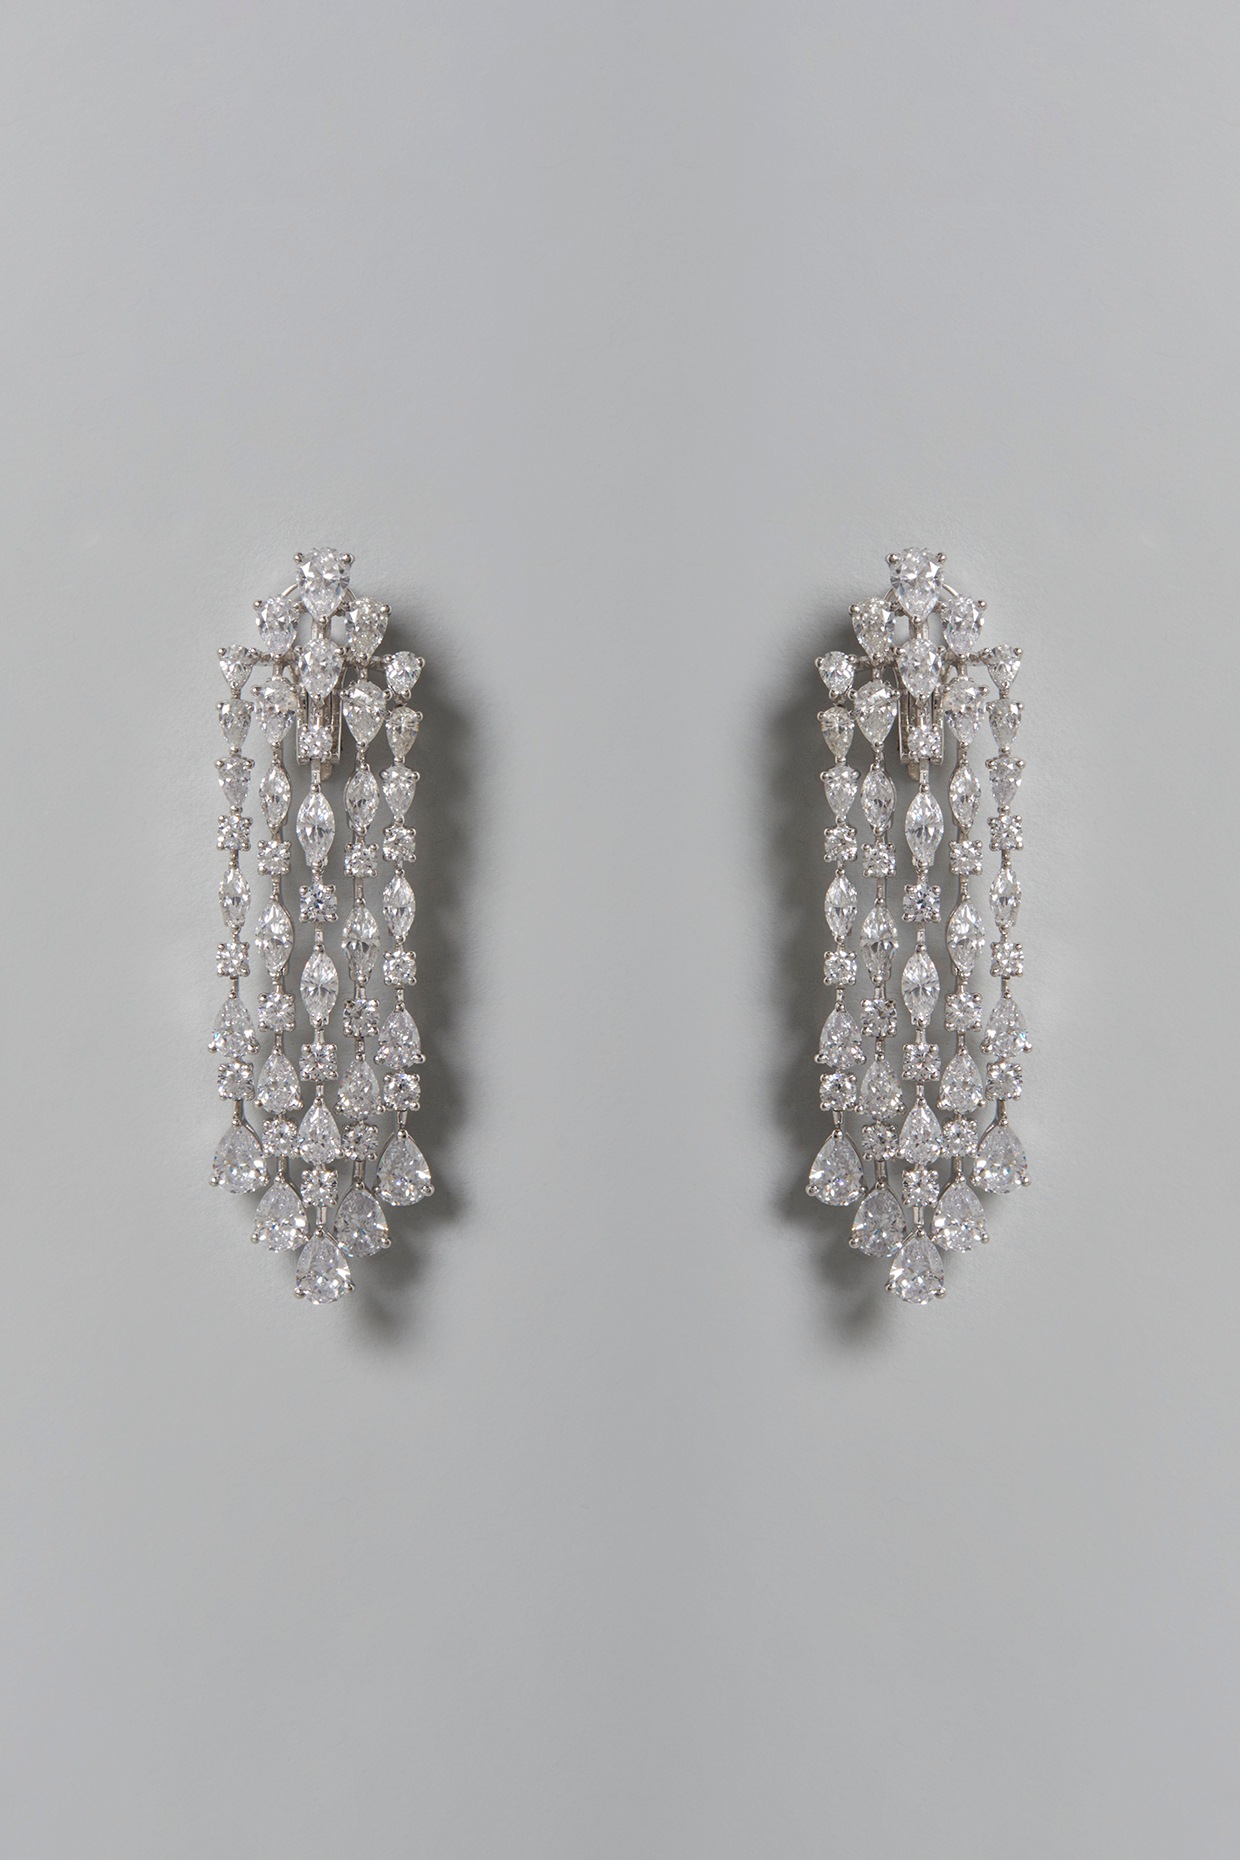 Long Chandelier Earrings, with Green Drop Shaped Stones : Amazon.in: Fashion